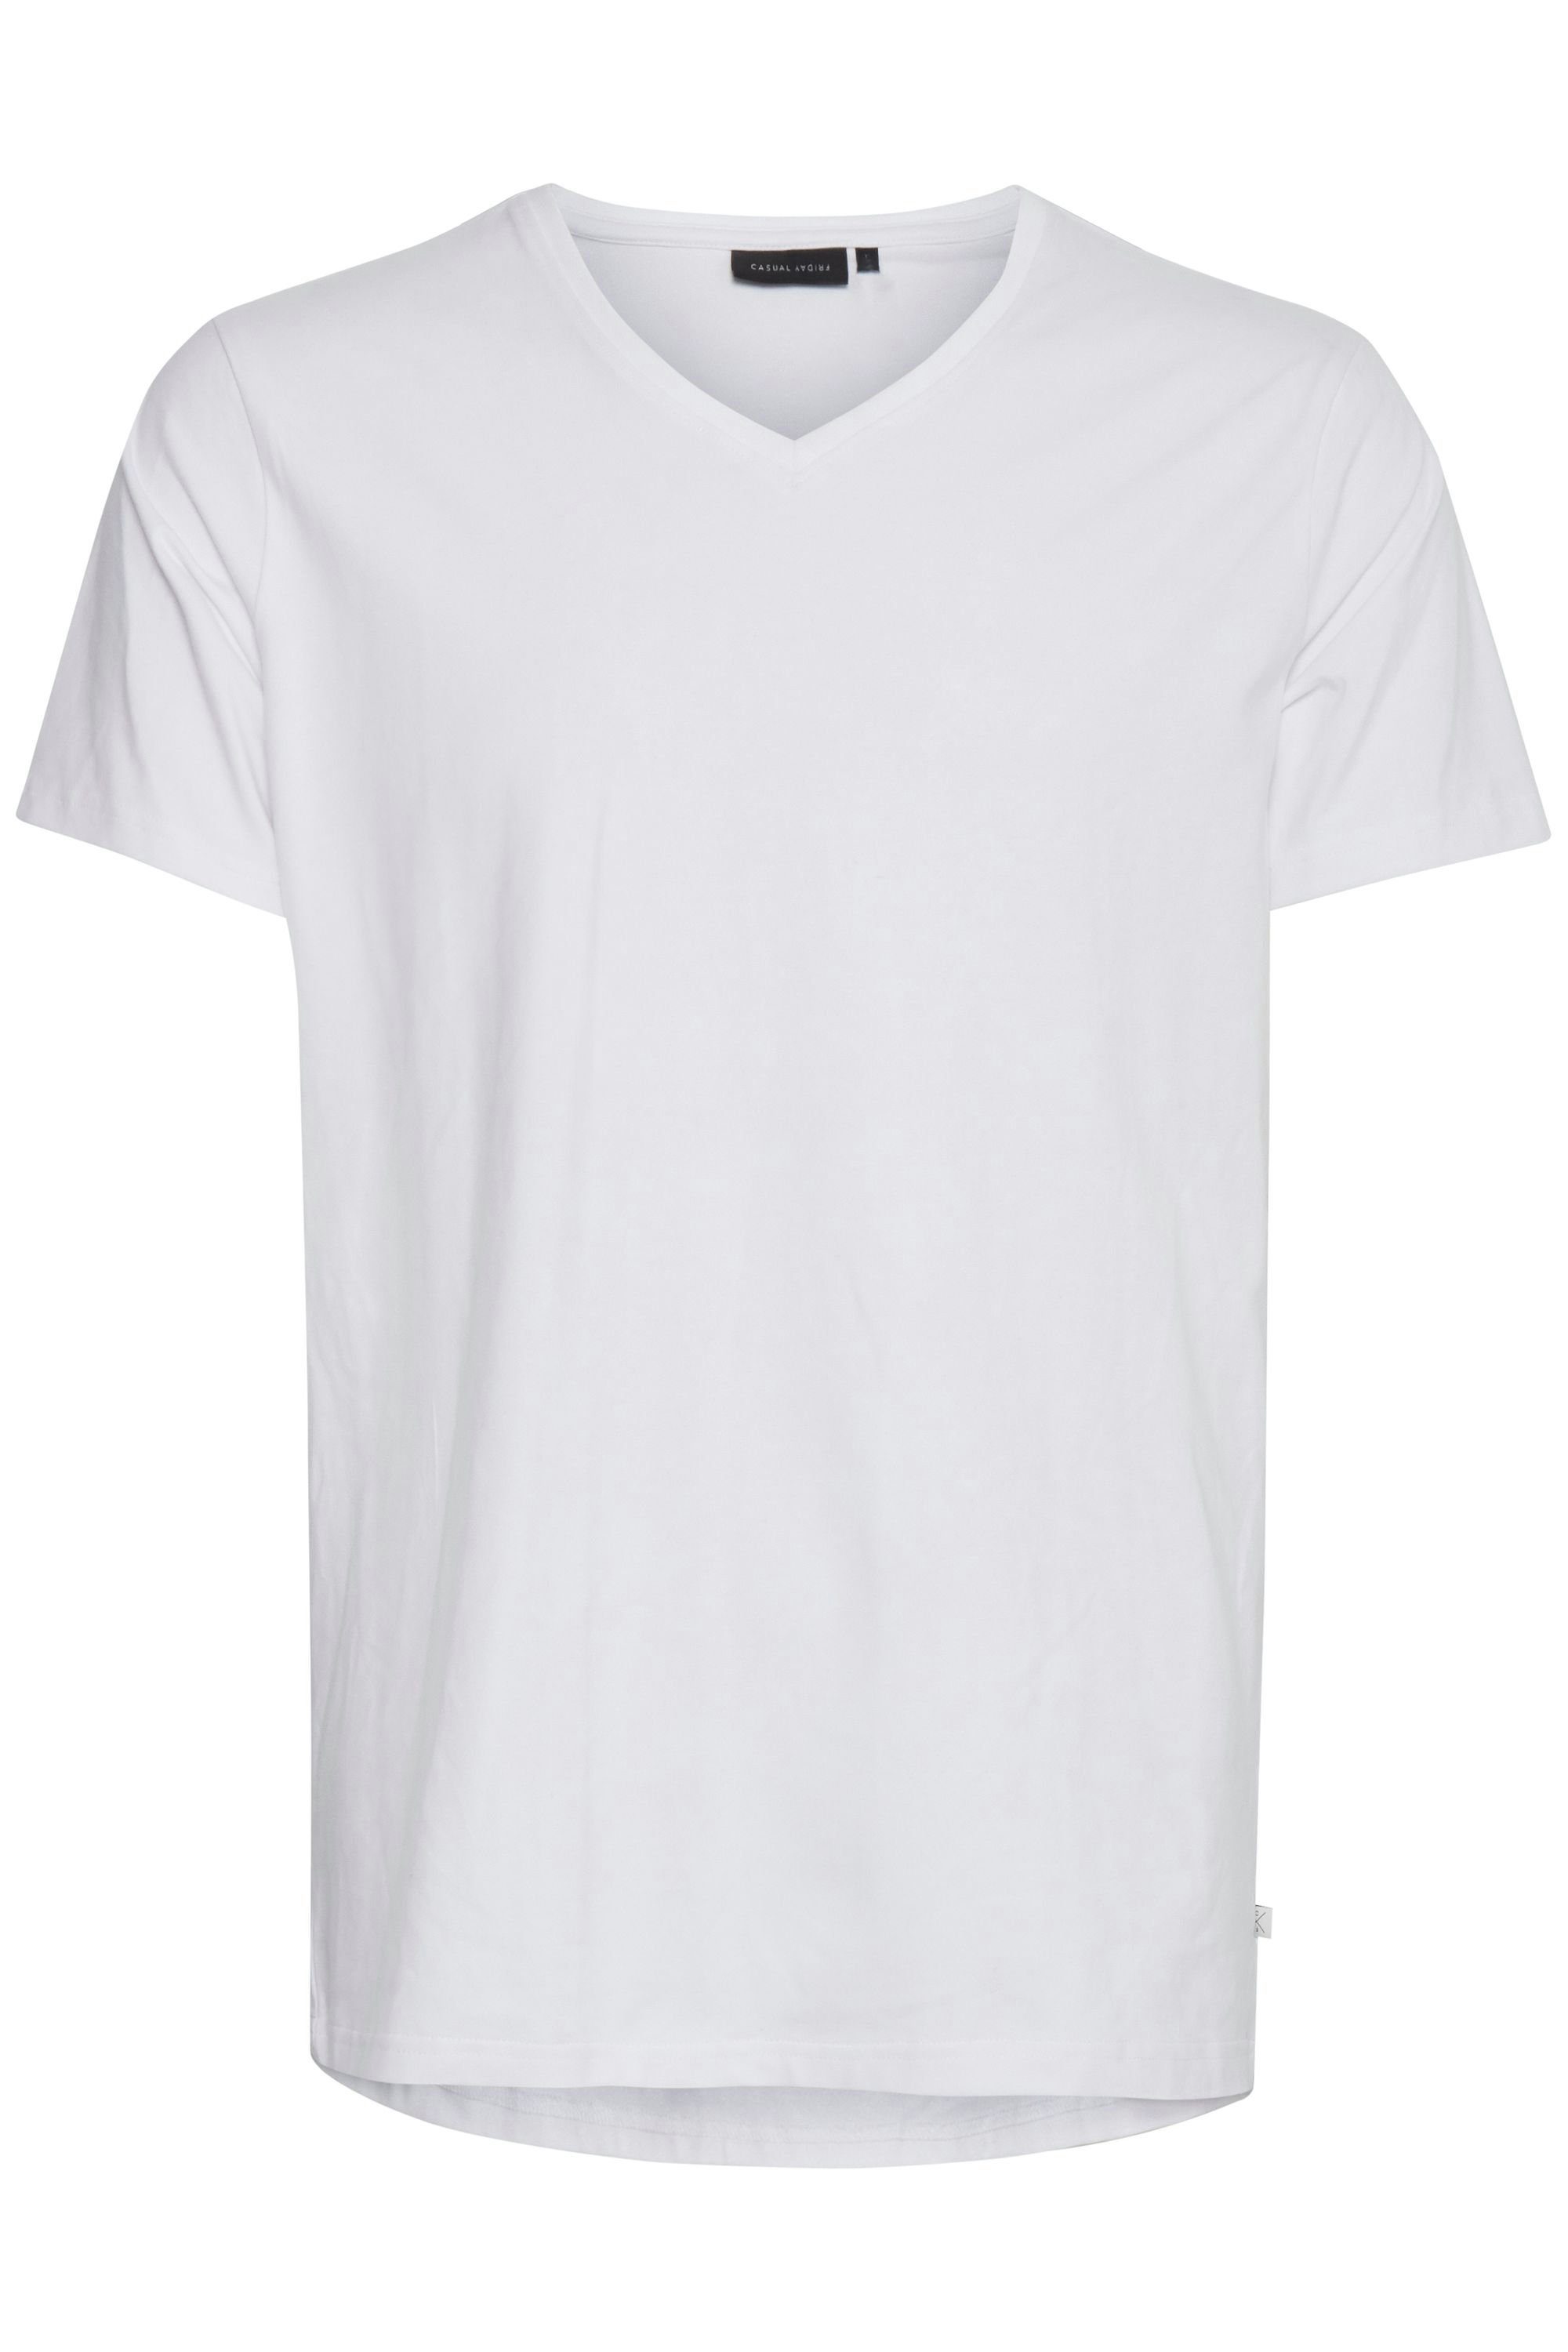 - V-Ausschnitt Bright (50104) CFLincoln 20503062 white T-Shirt Casual Friday T-Shirt mit